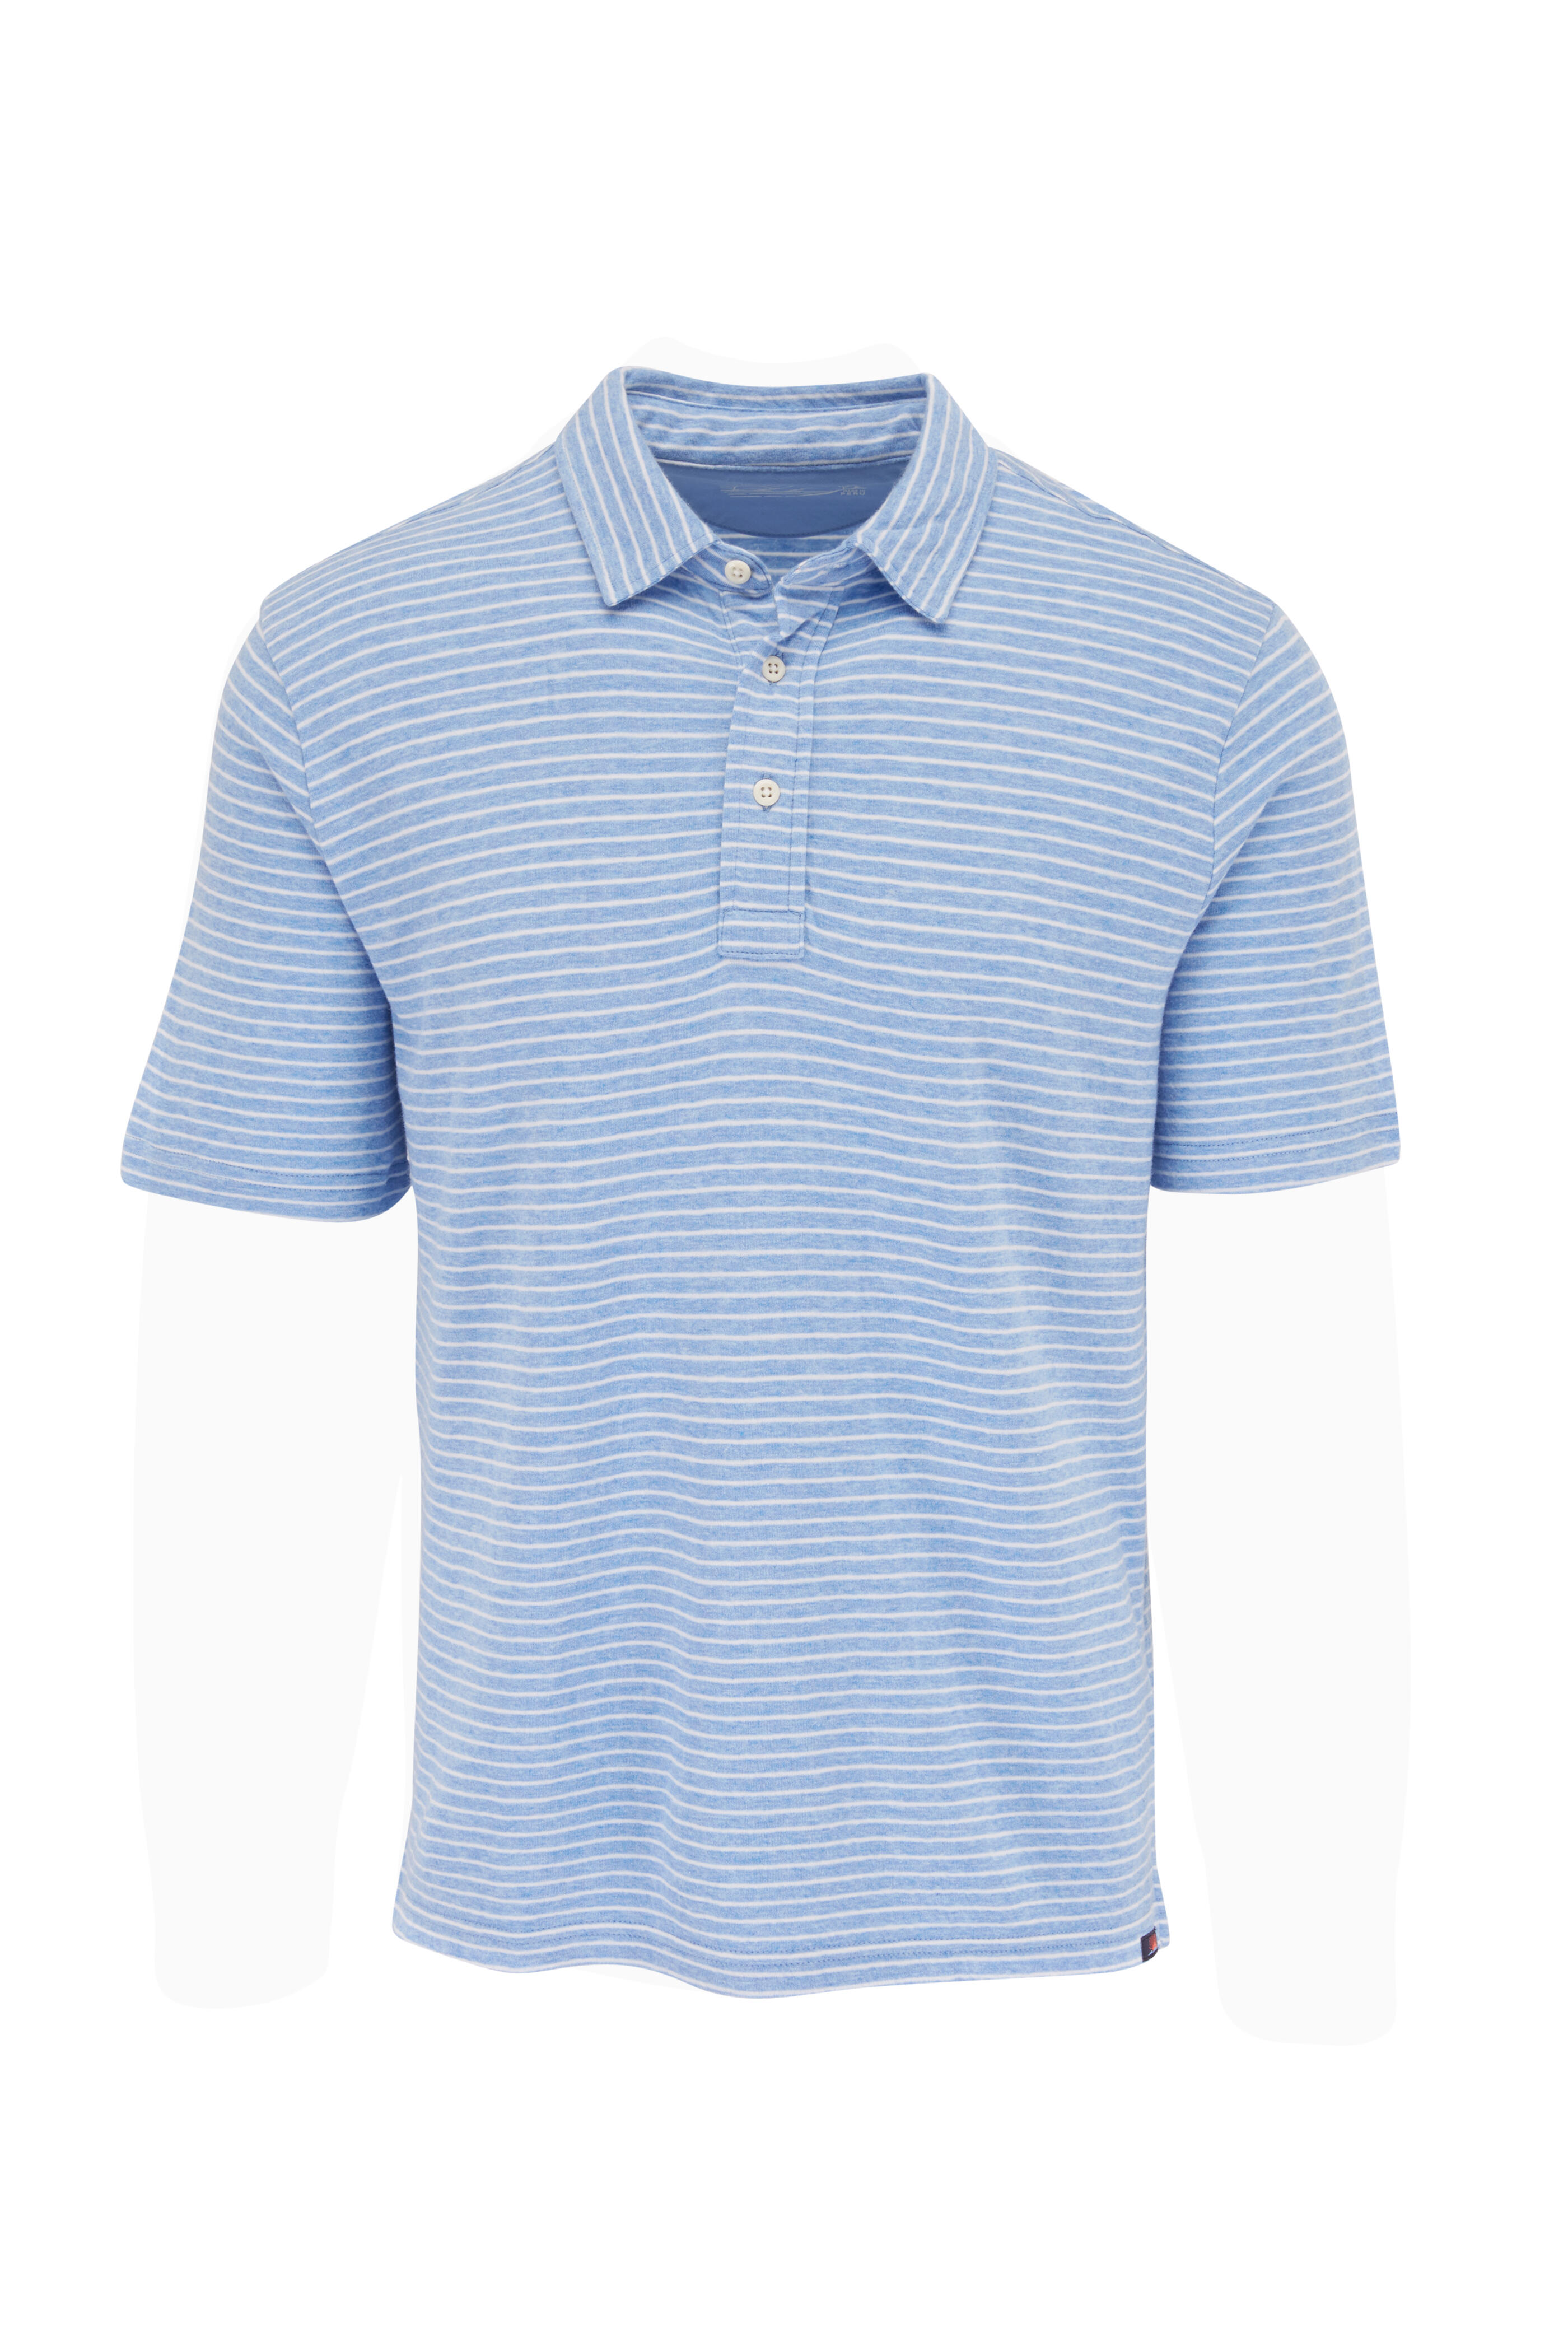 Faherty Brand - Cloud Blue & White Stripe Short Sleeve Polo